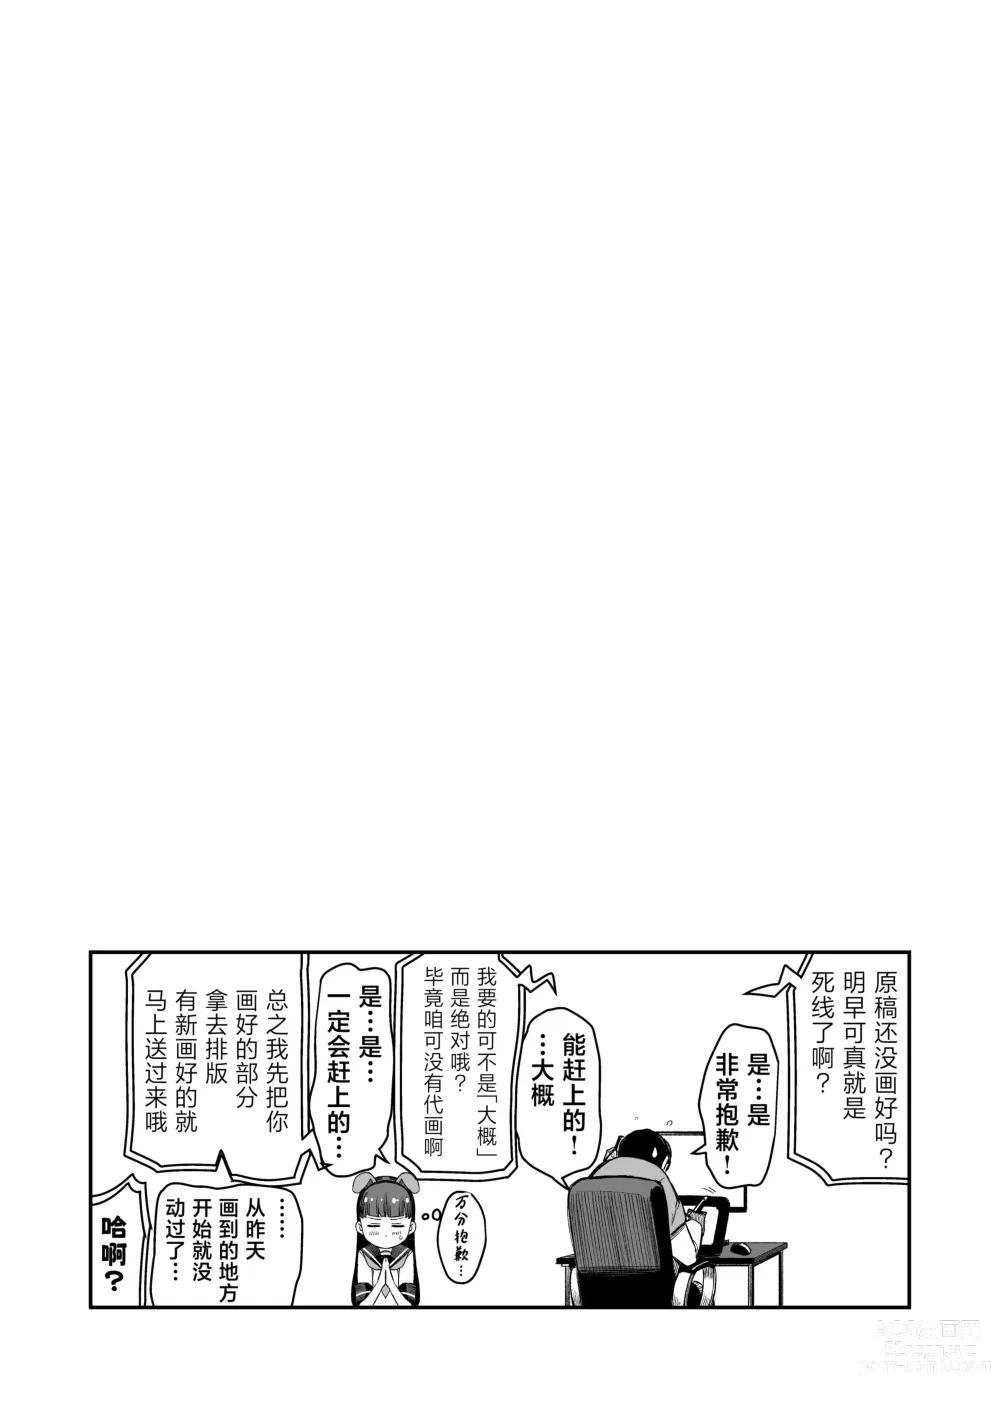 Page 37 of doujinshi 漫画里的、 抖M少女——。